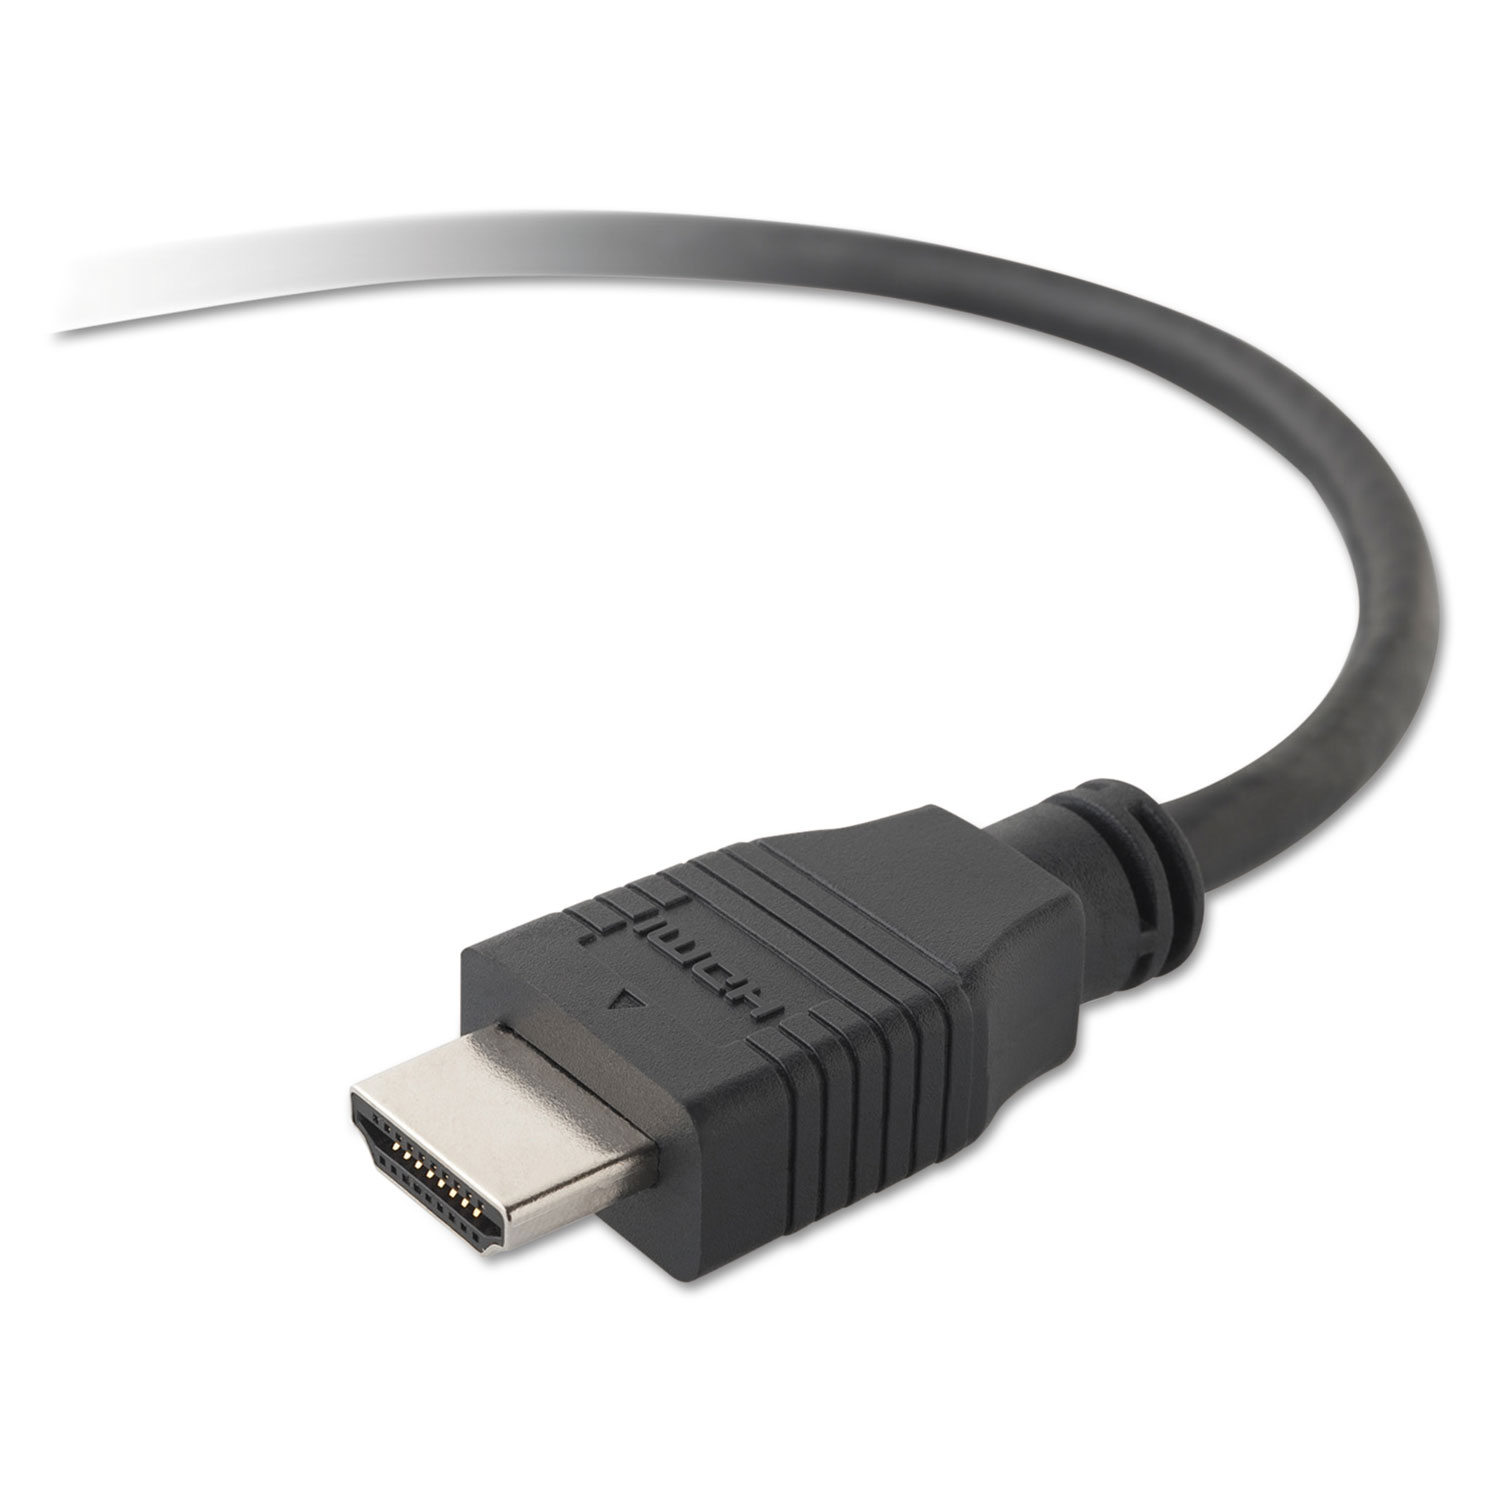  Belkin F8V3311B25 HDMI to HDMI Audio/Video Cable, 25 ft., Black (BLKF8V3311B25) 